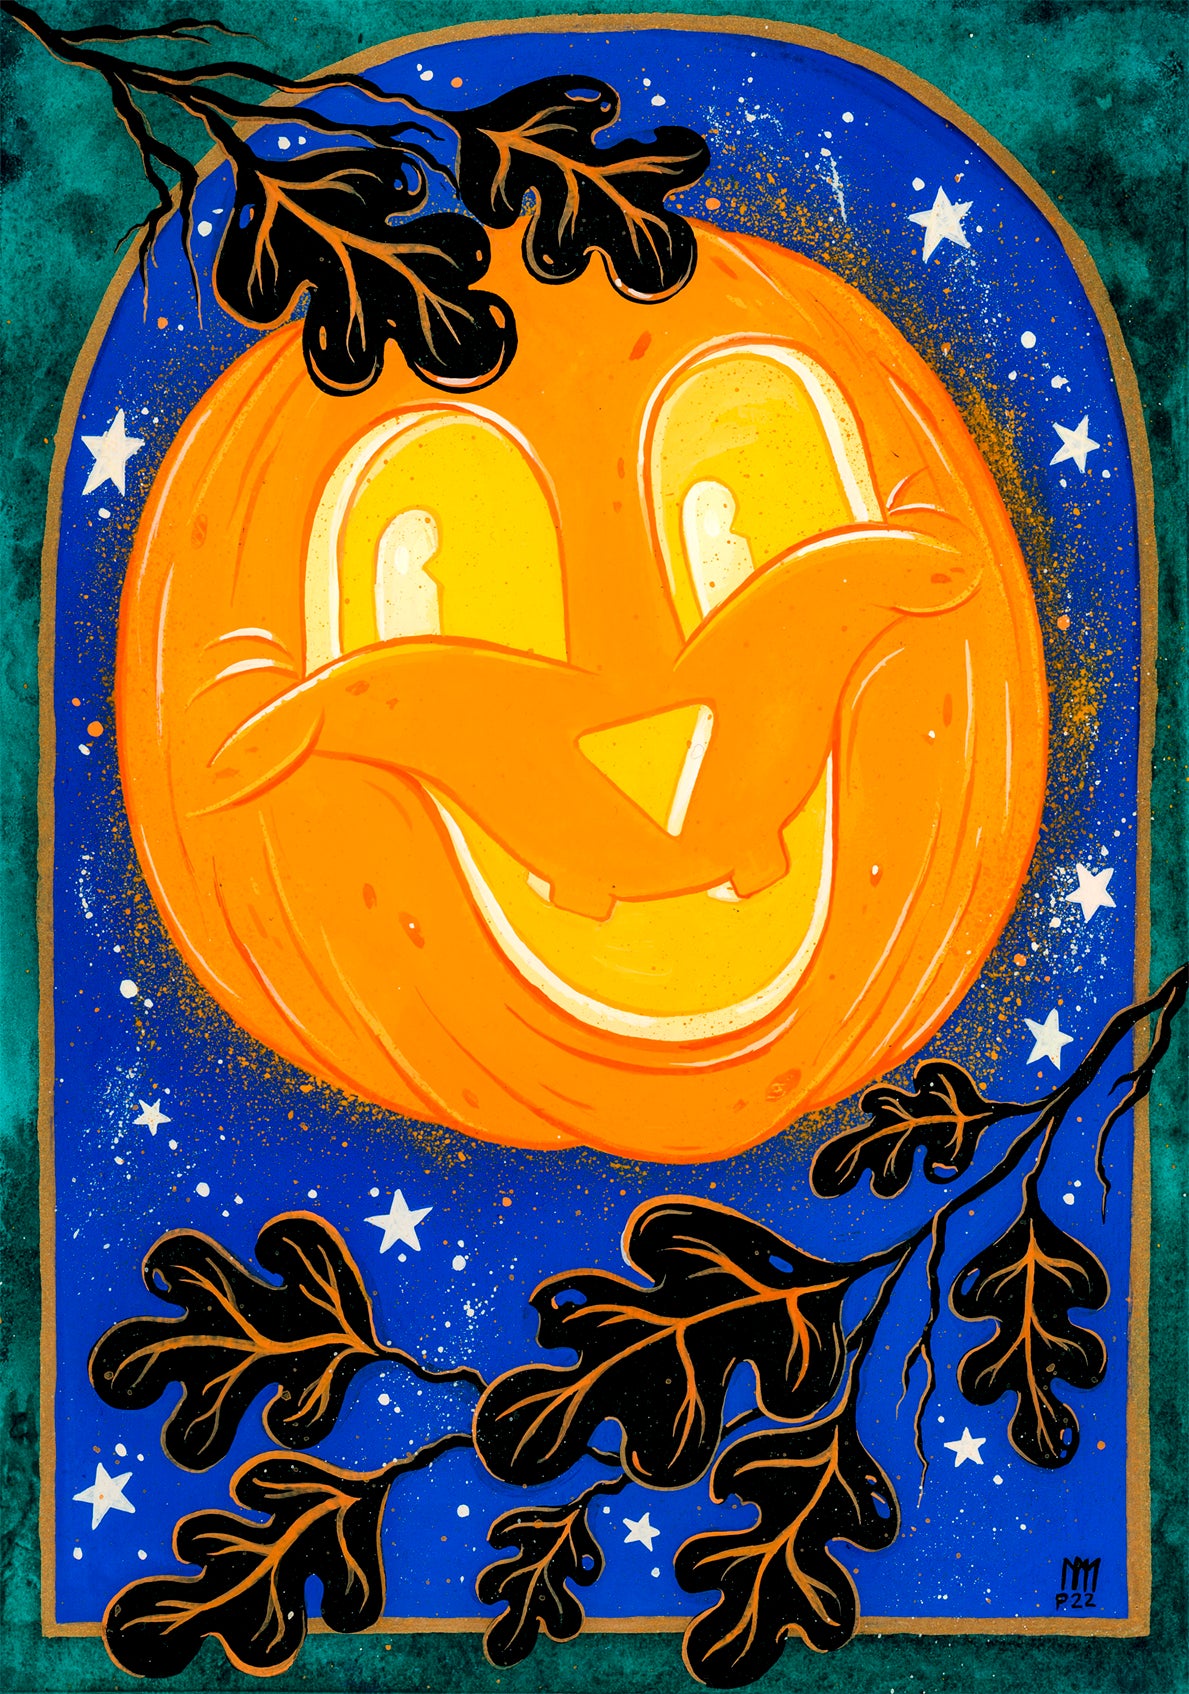 October Patreon Exclusive - The Moon Celebrates Halloween!